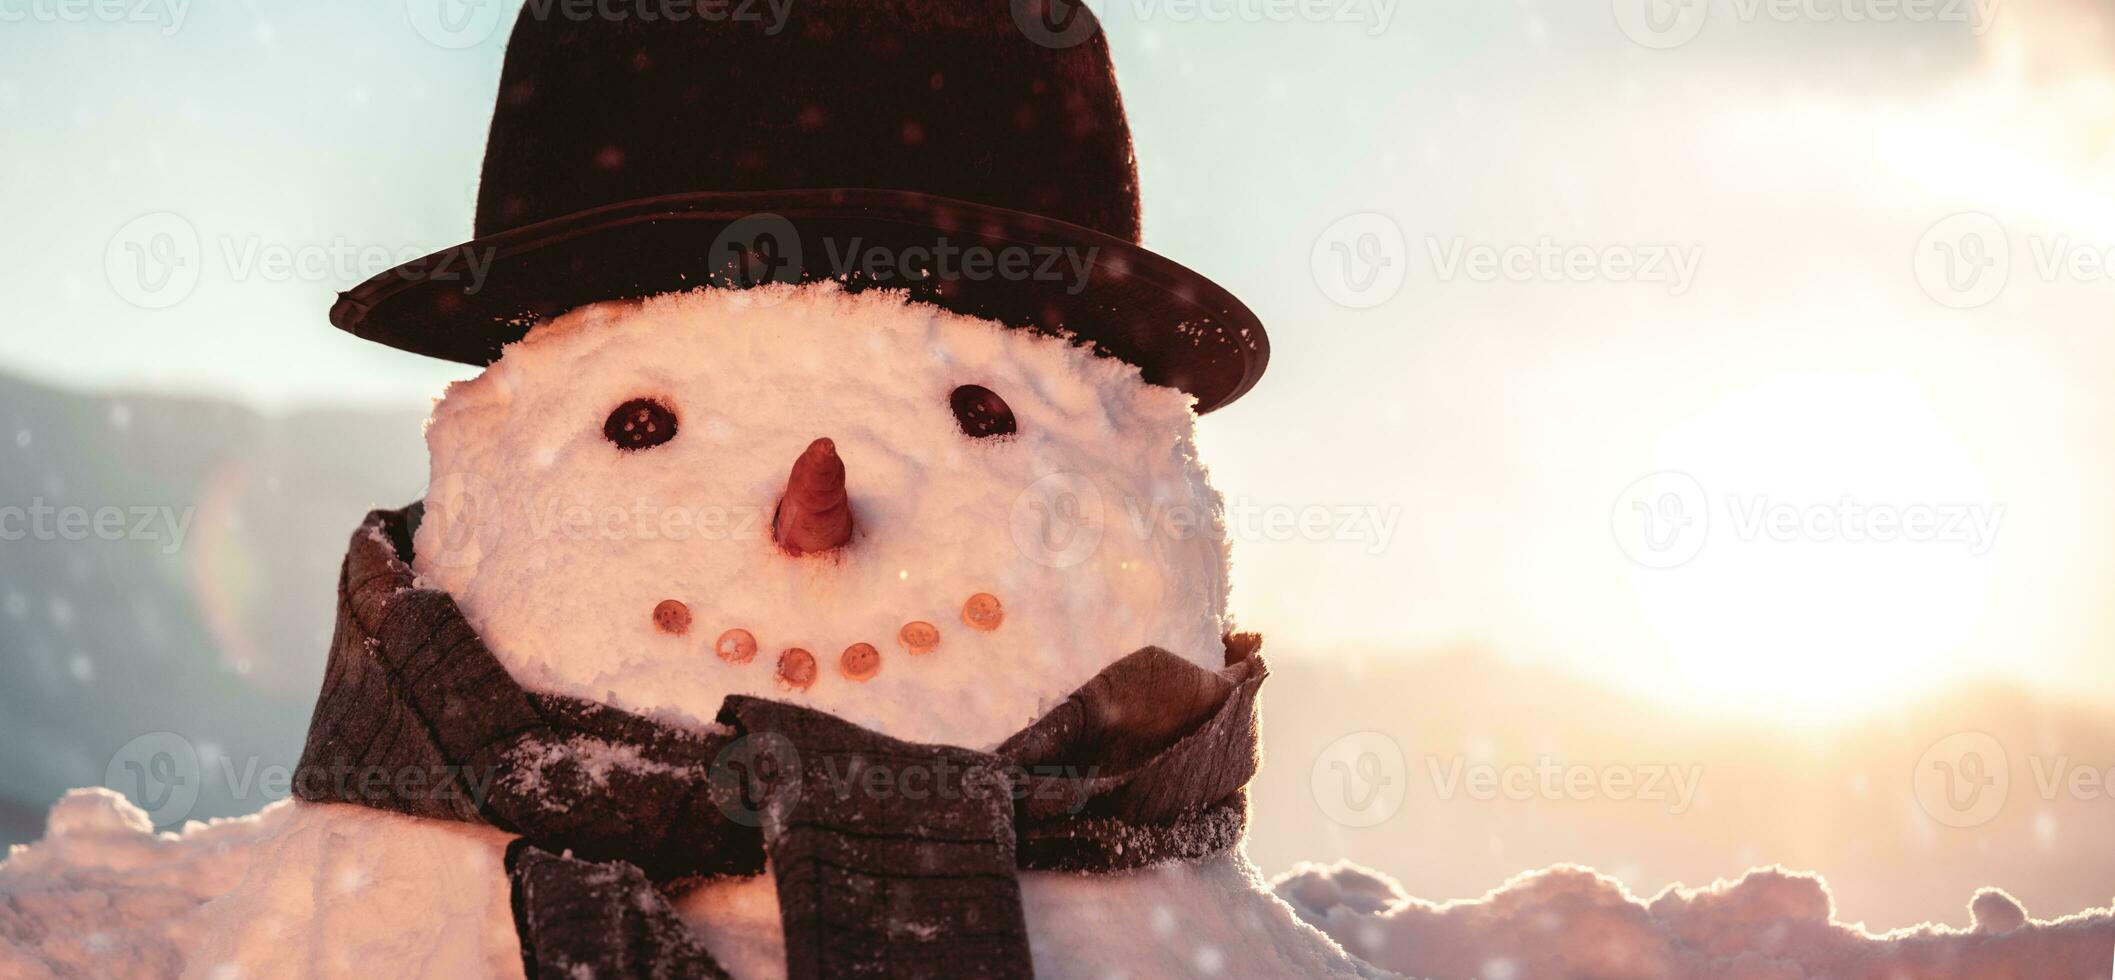 stor söt snögubbe porträtt foto